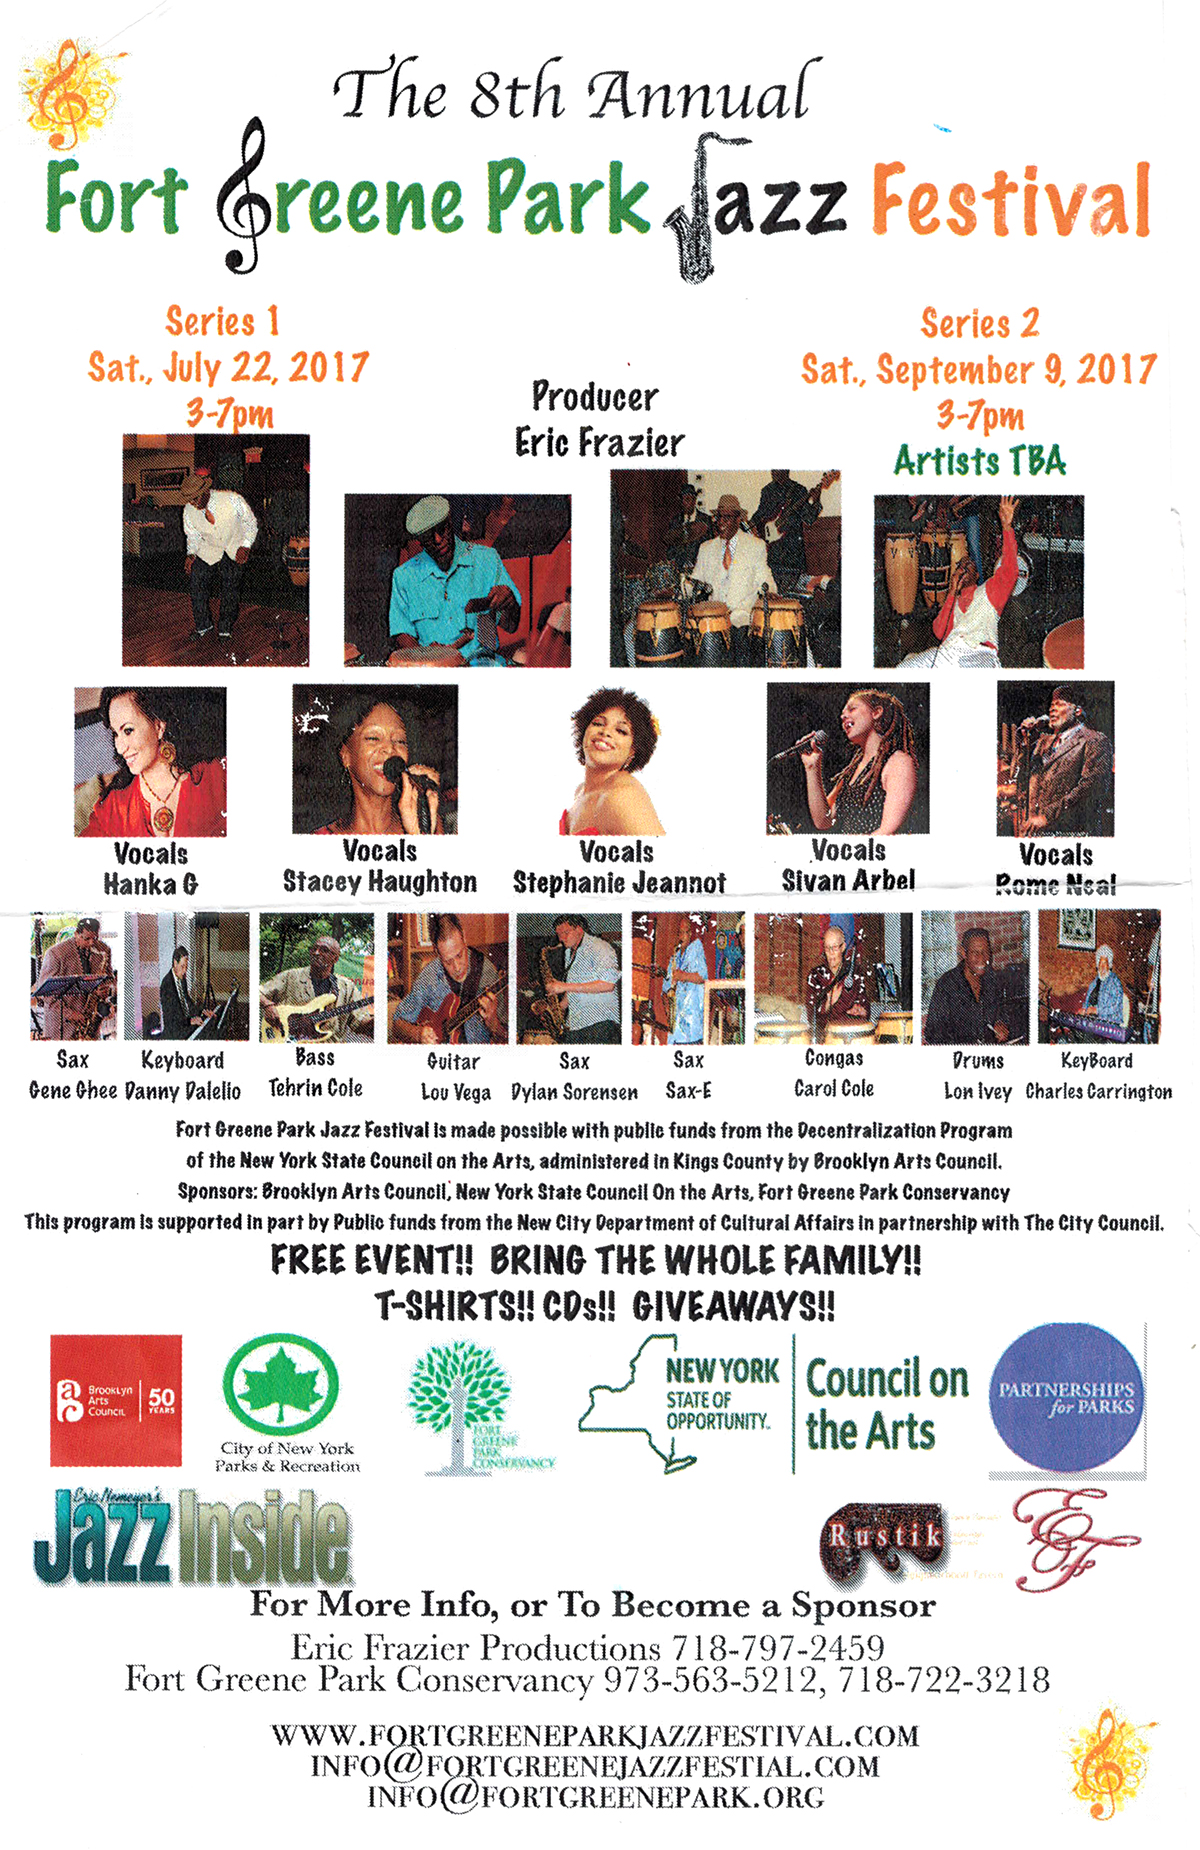 Fort Greene Park Jazz Festival - Myrtle Avenue Brooklyn Partnership